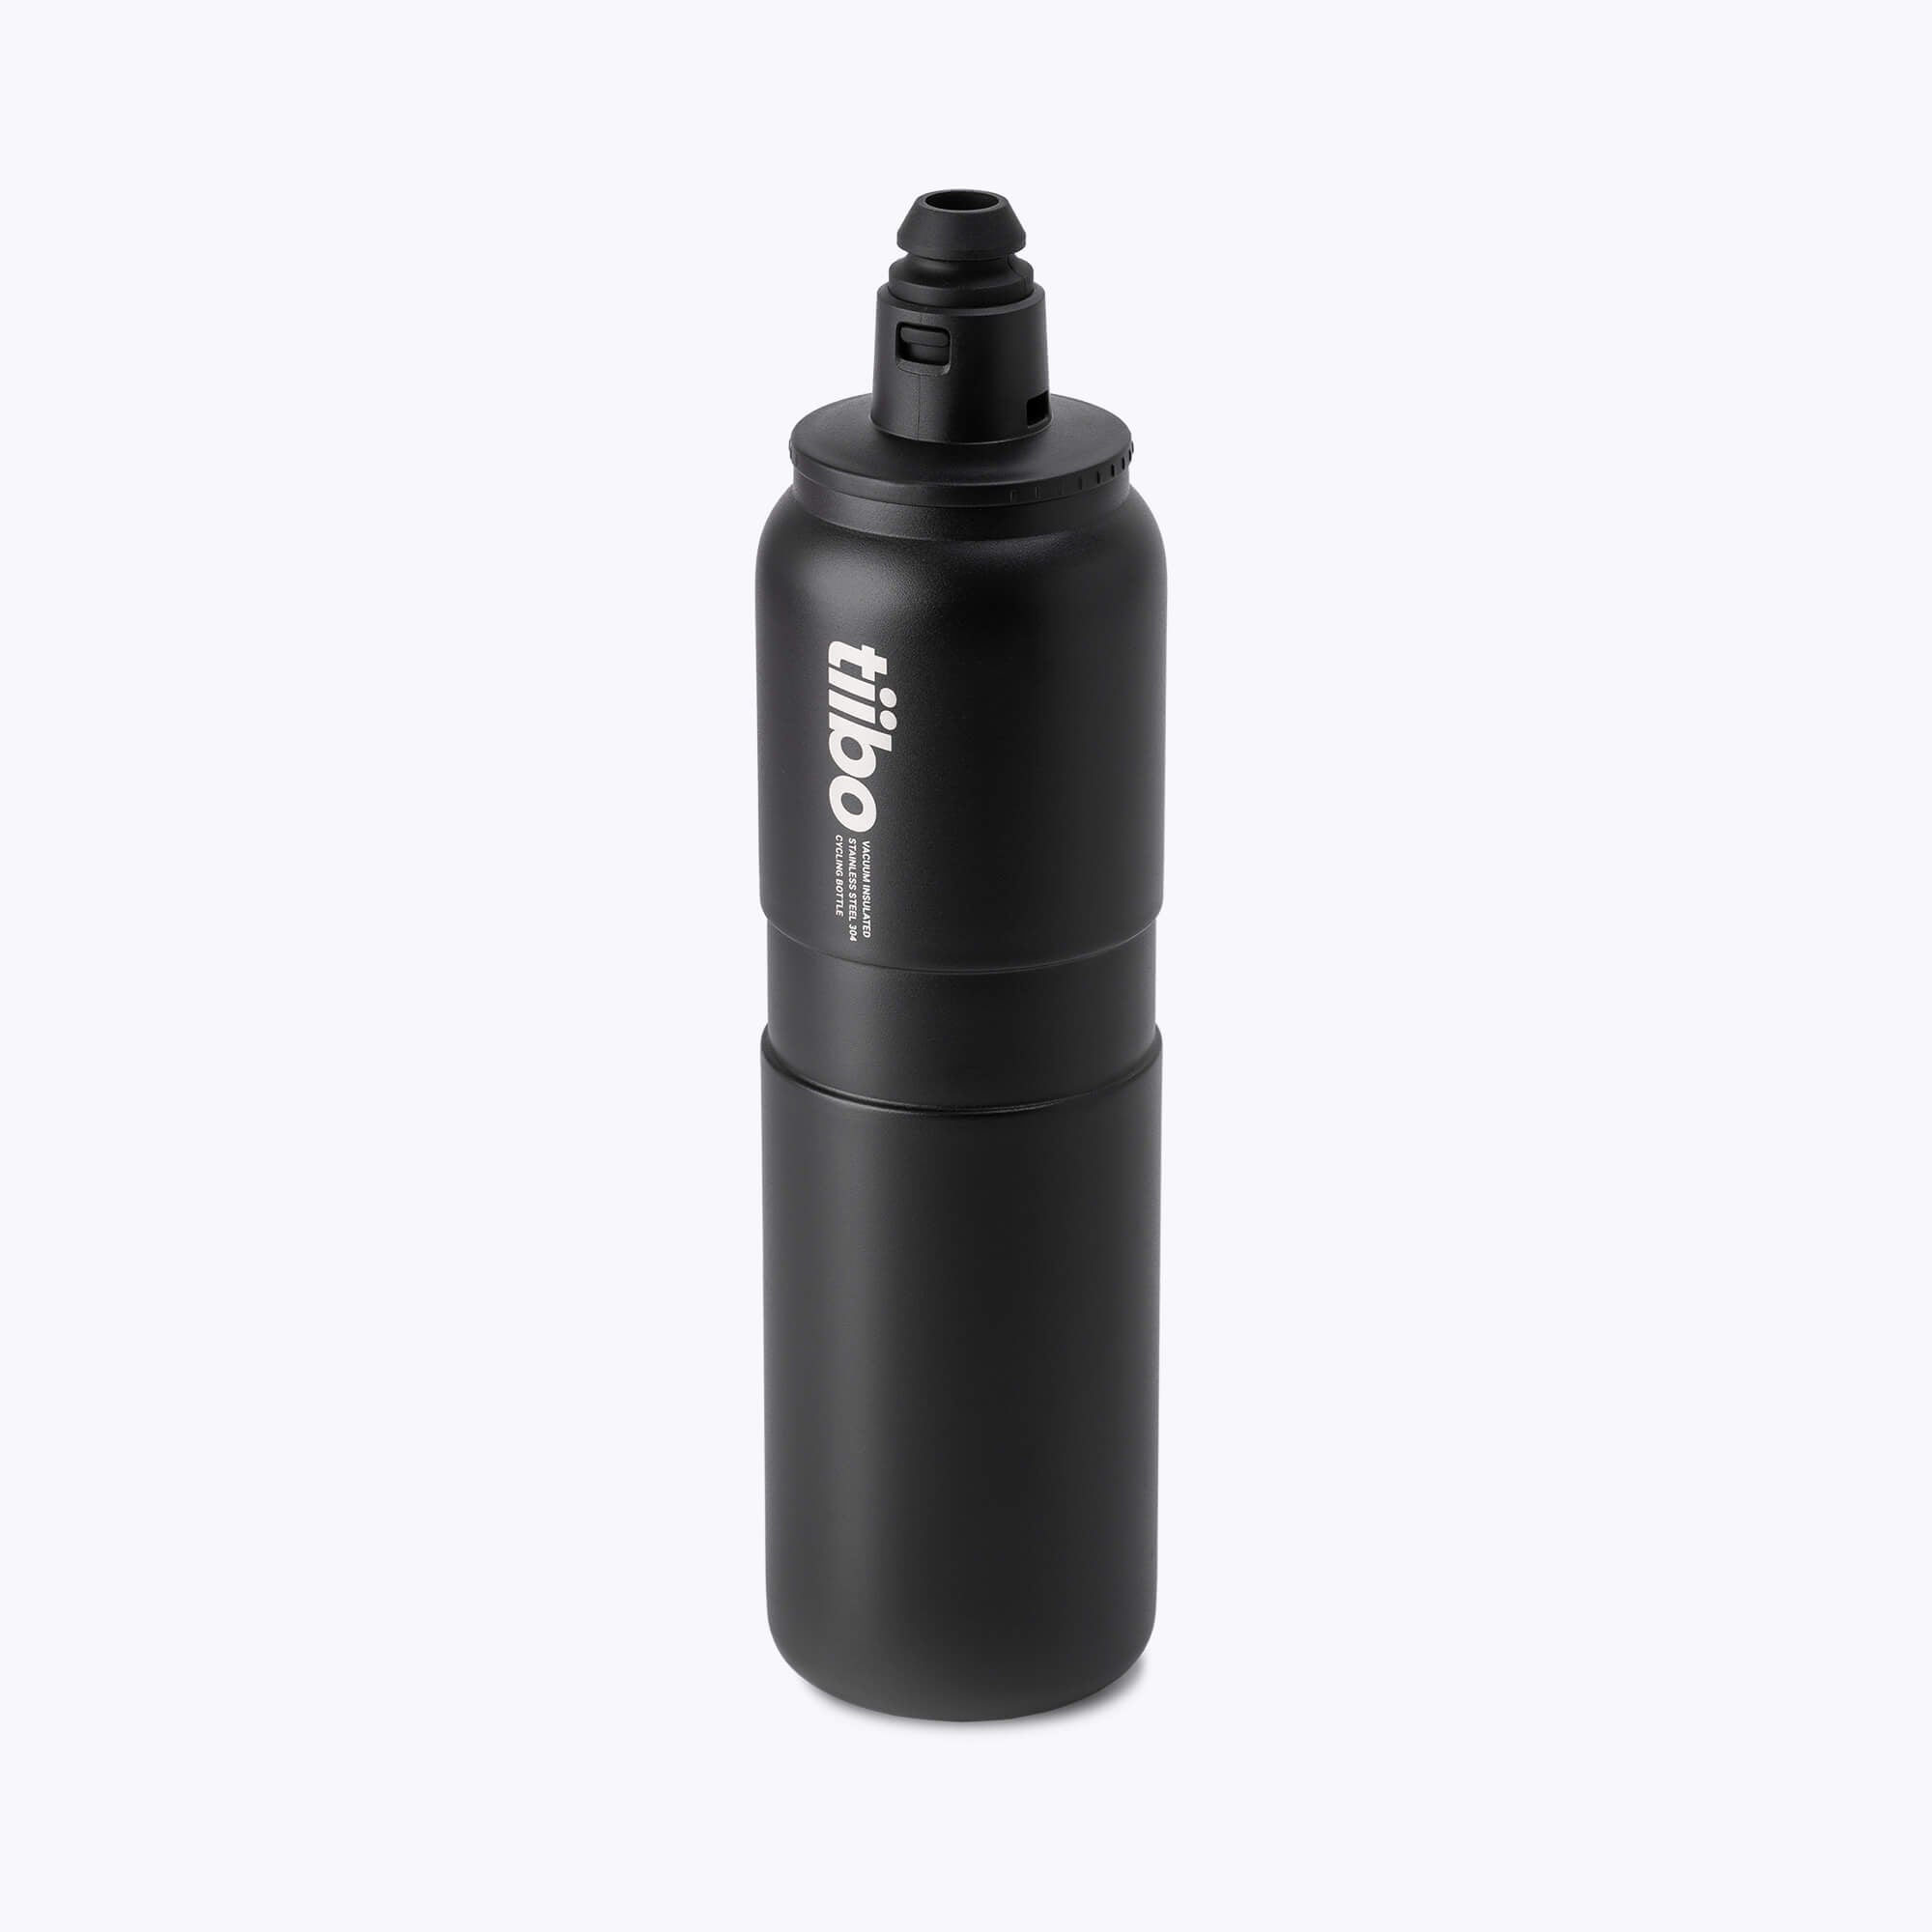 tiibo Vacuum Insulated Sports Bottle 23oz